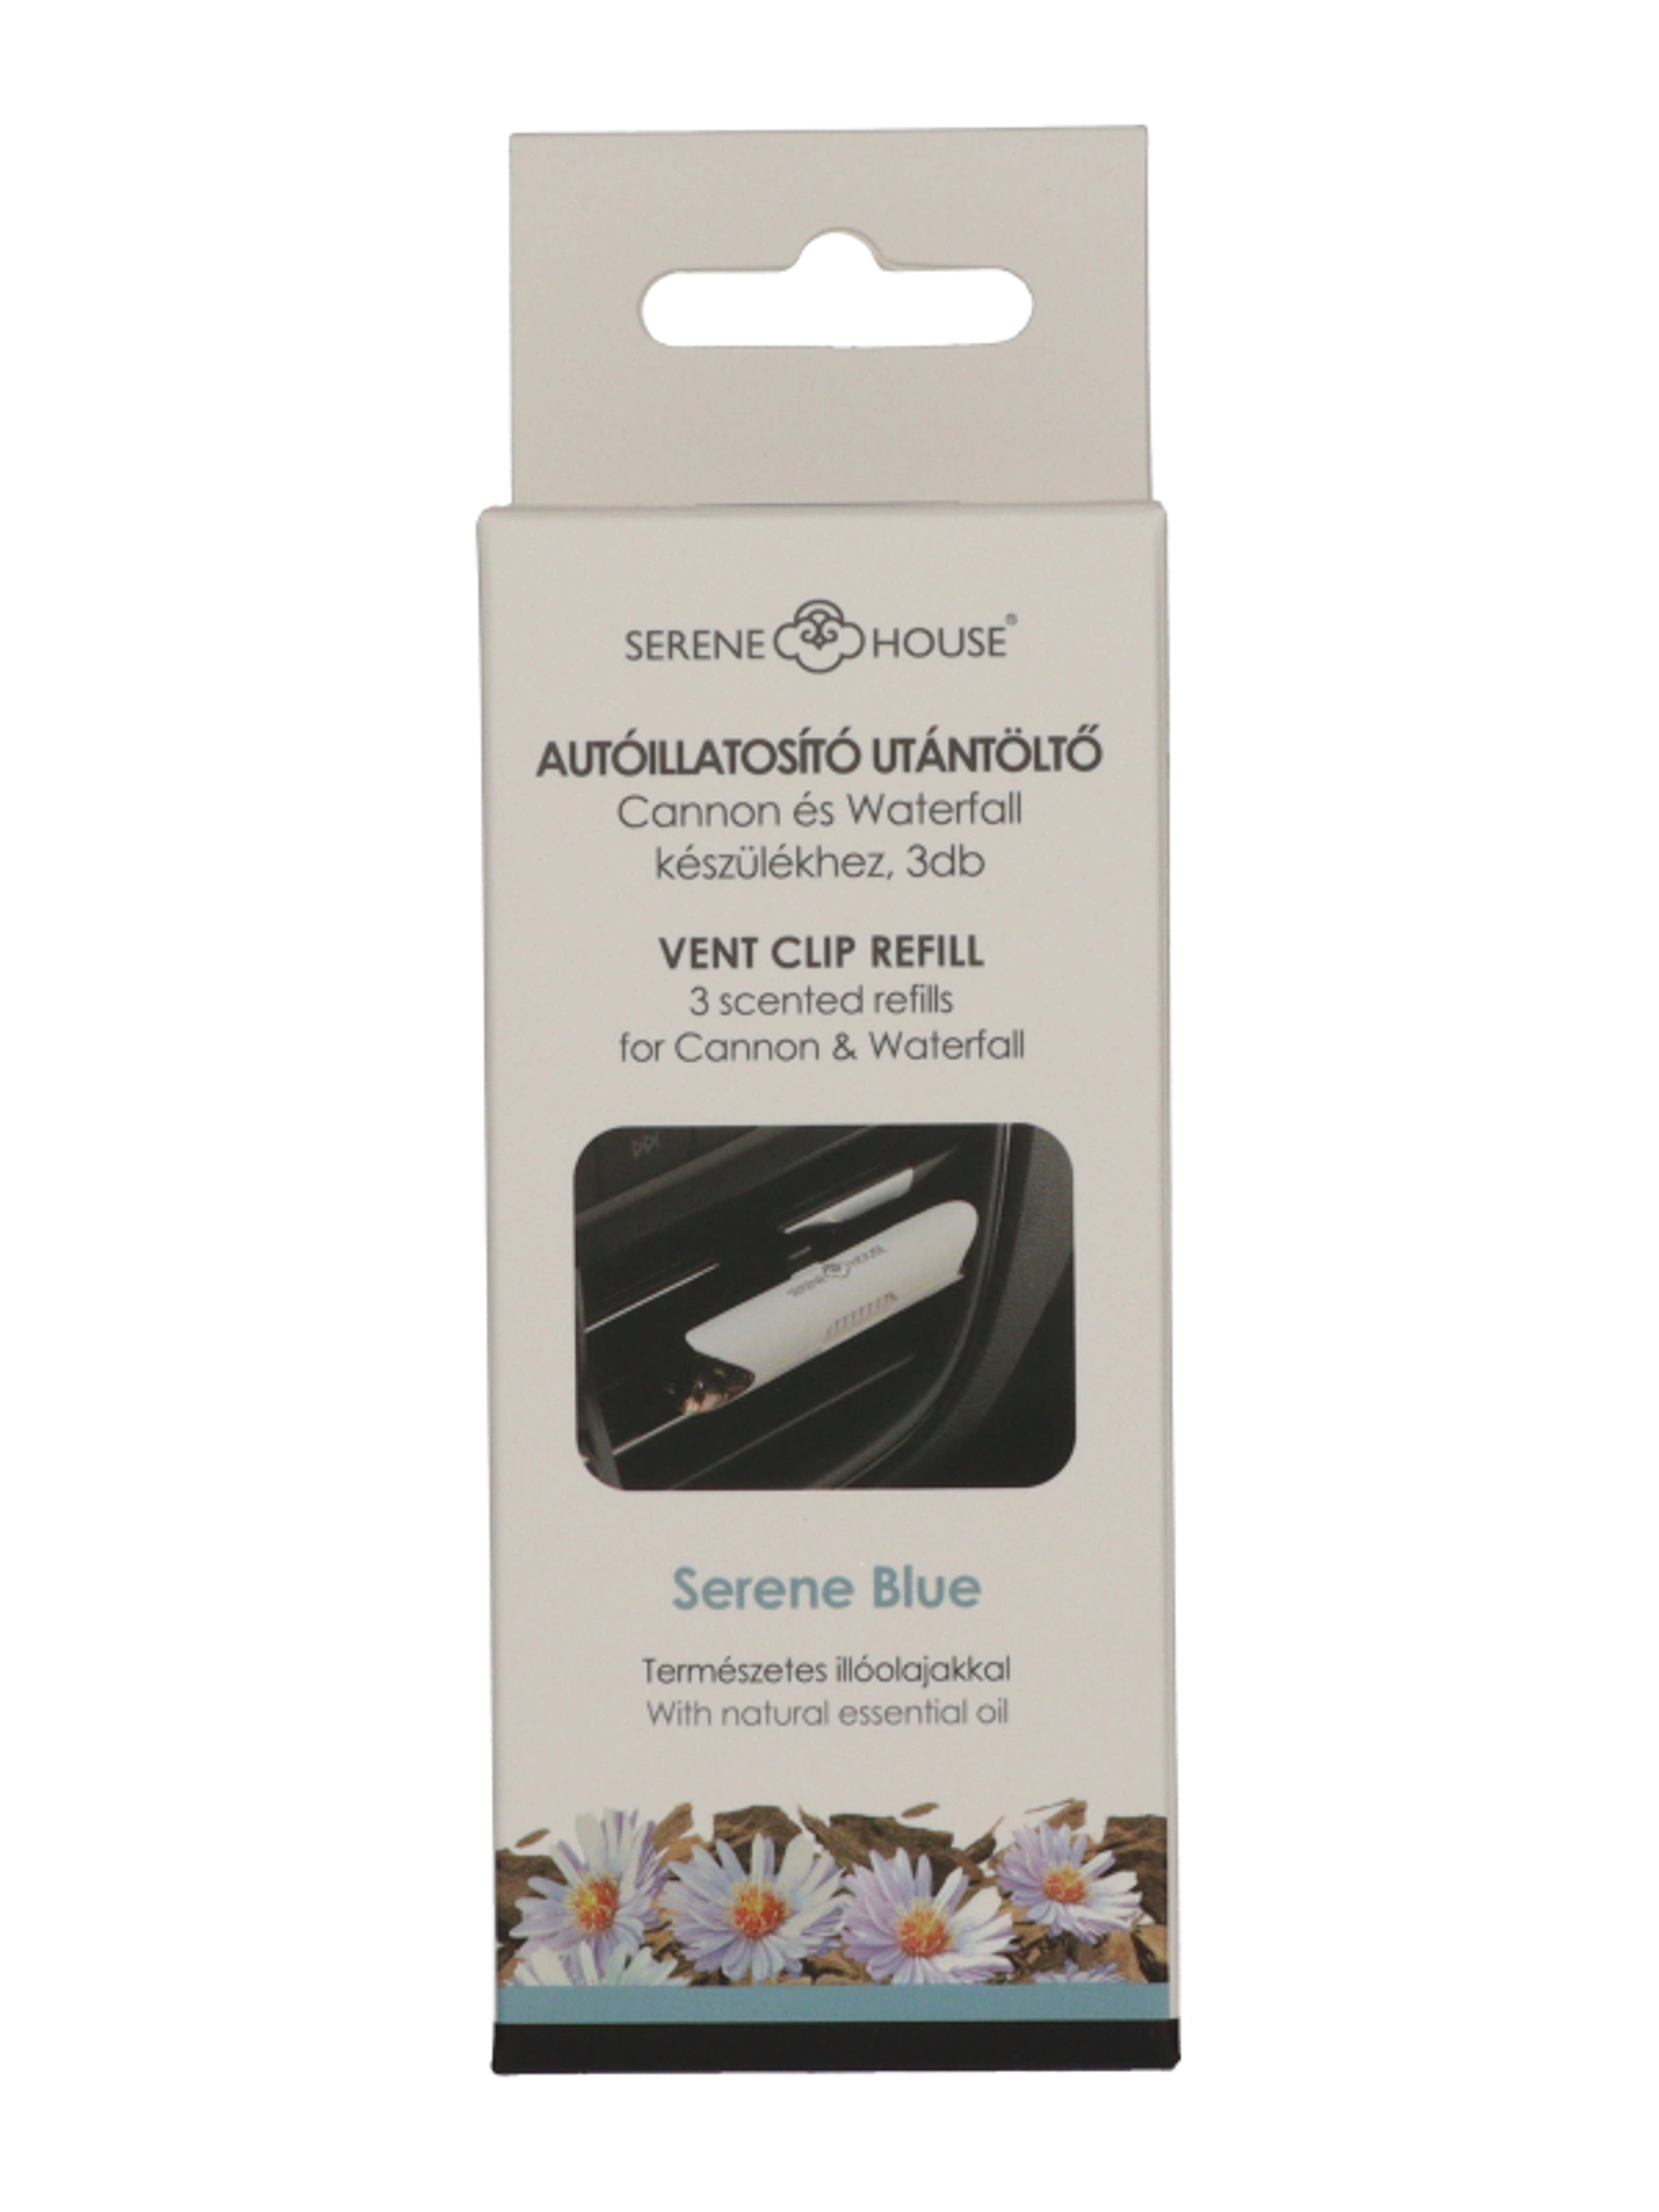 Serene House Canon autós illatosító utántöltő /Serene Blue - 1 db